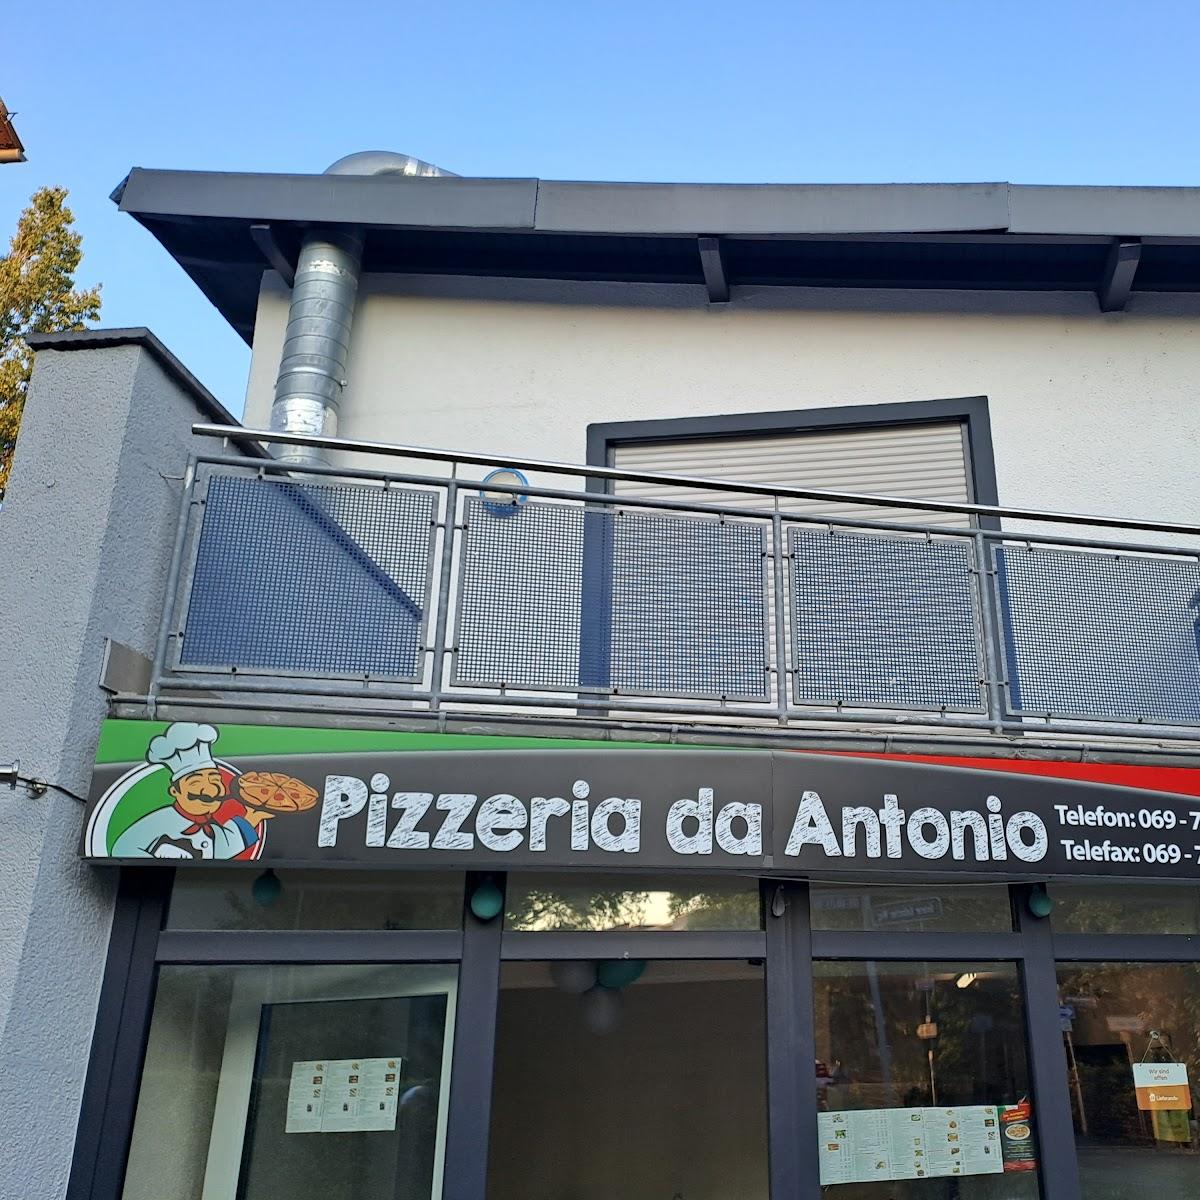 Restaurant "Pizzeria Da Antonio" in Frankfurt am Main